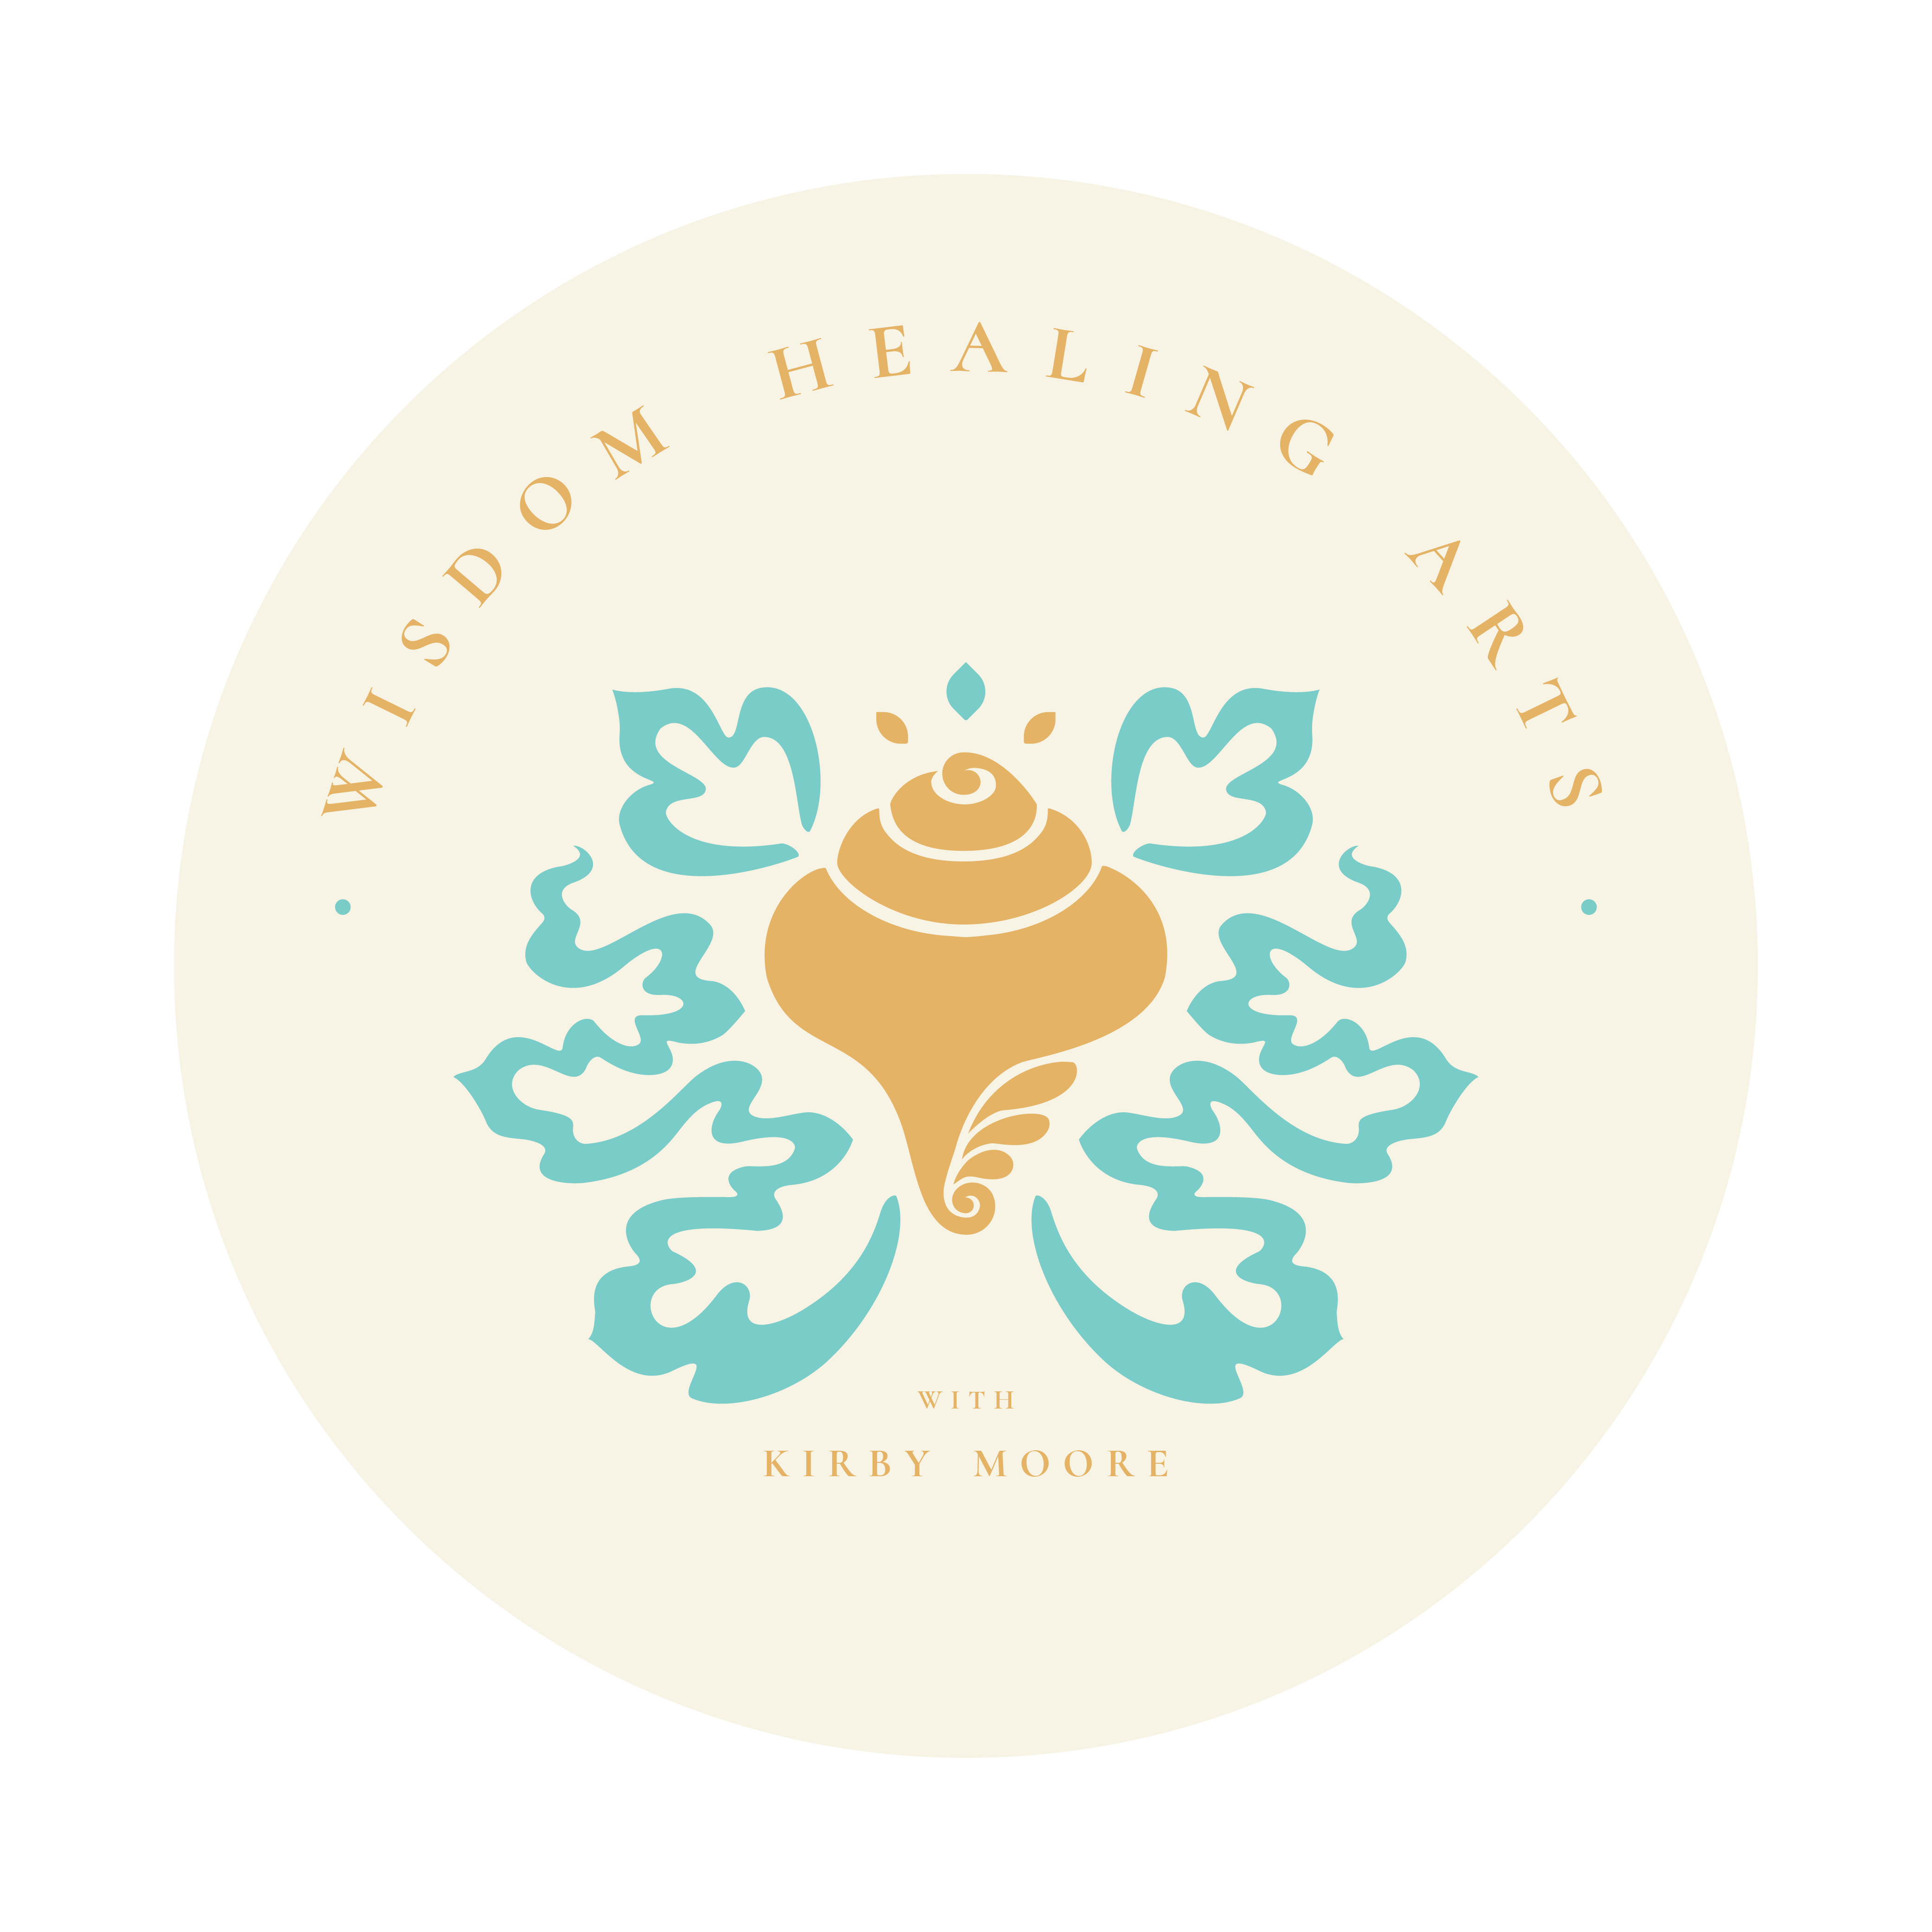 Wisdom Healing Arts logo